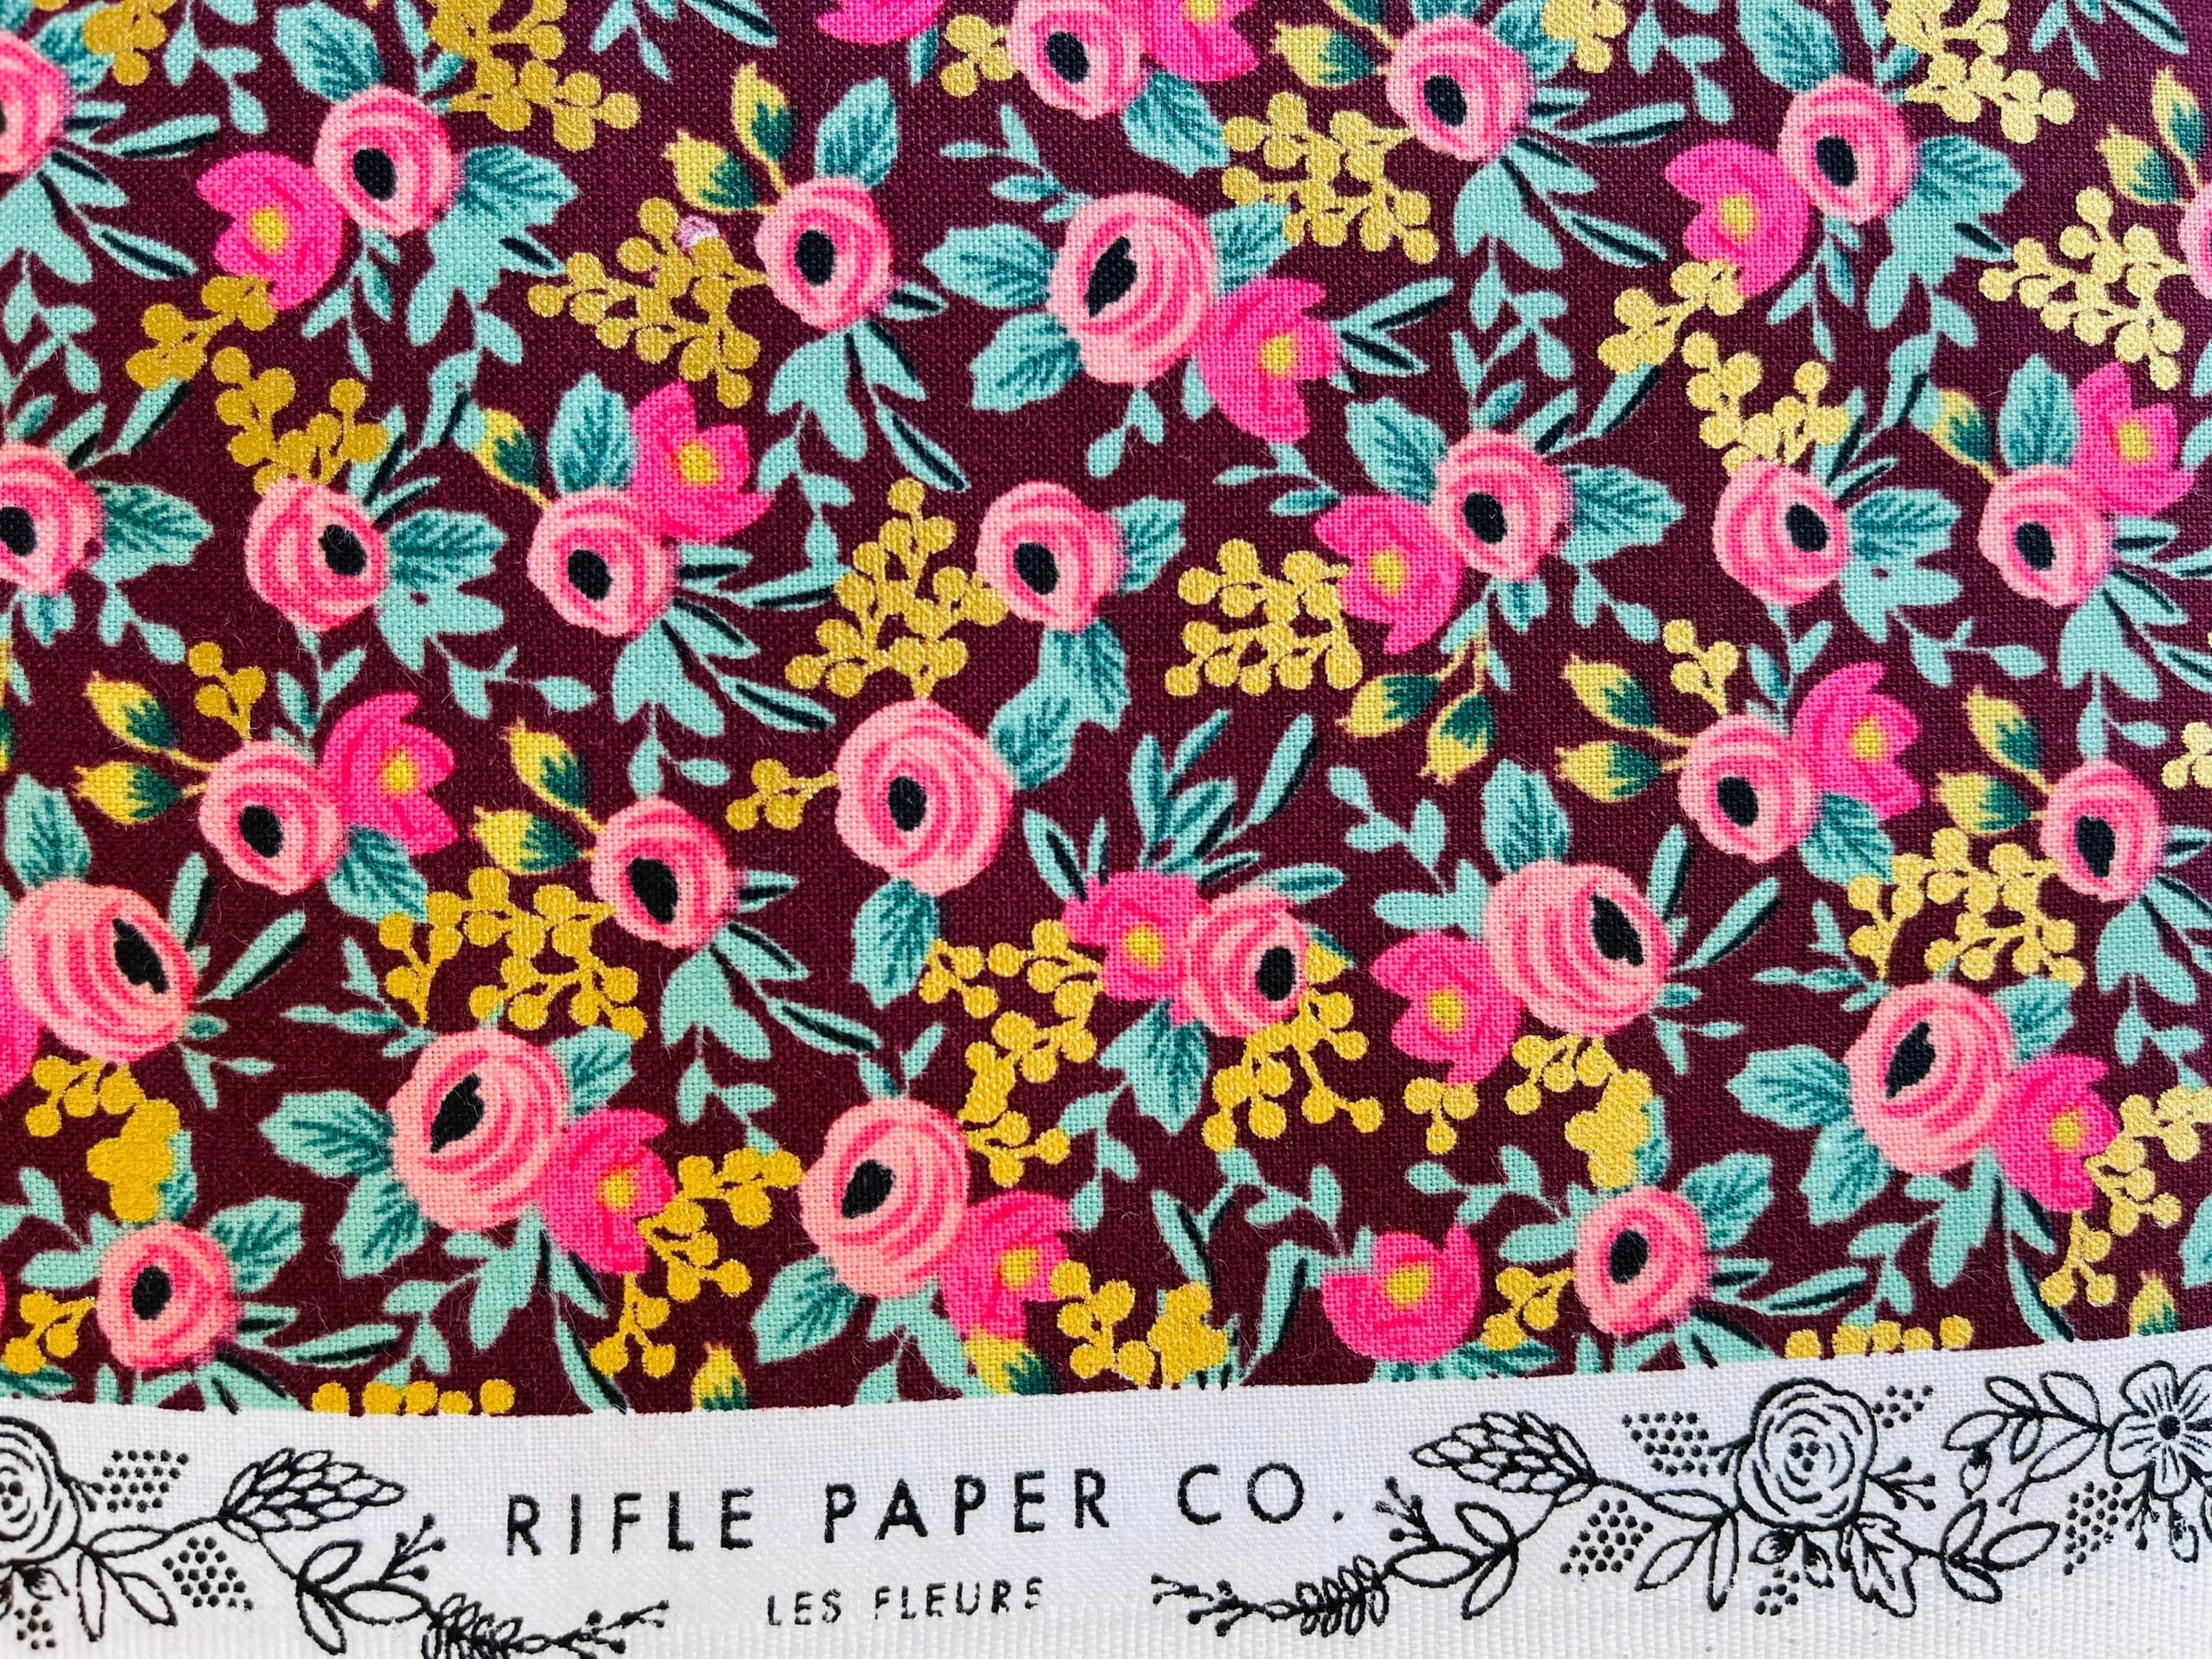 Garden Party Rosa - Burgundy Metallic Fabric - Rifle Paper Co - Cotton + Steel - Quilting Cotton - RP305-BU5M